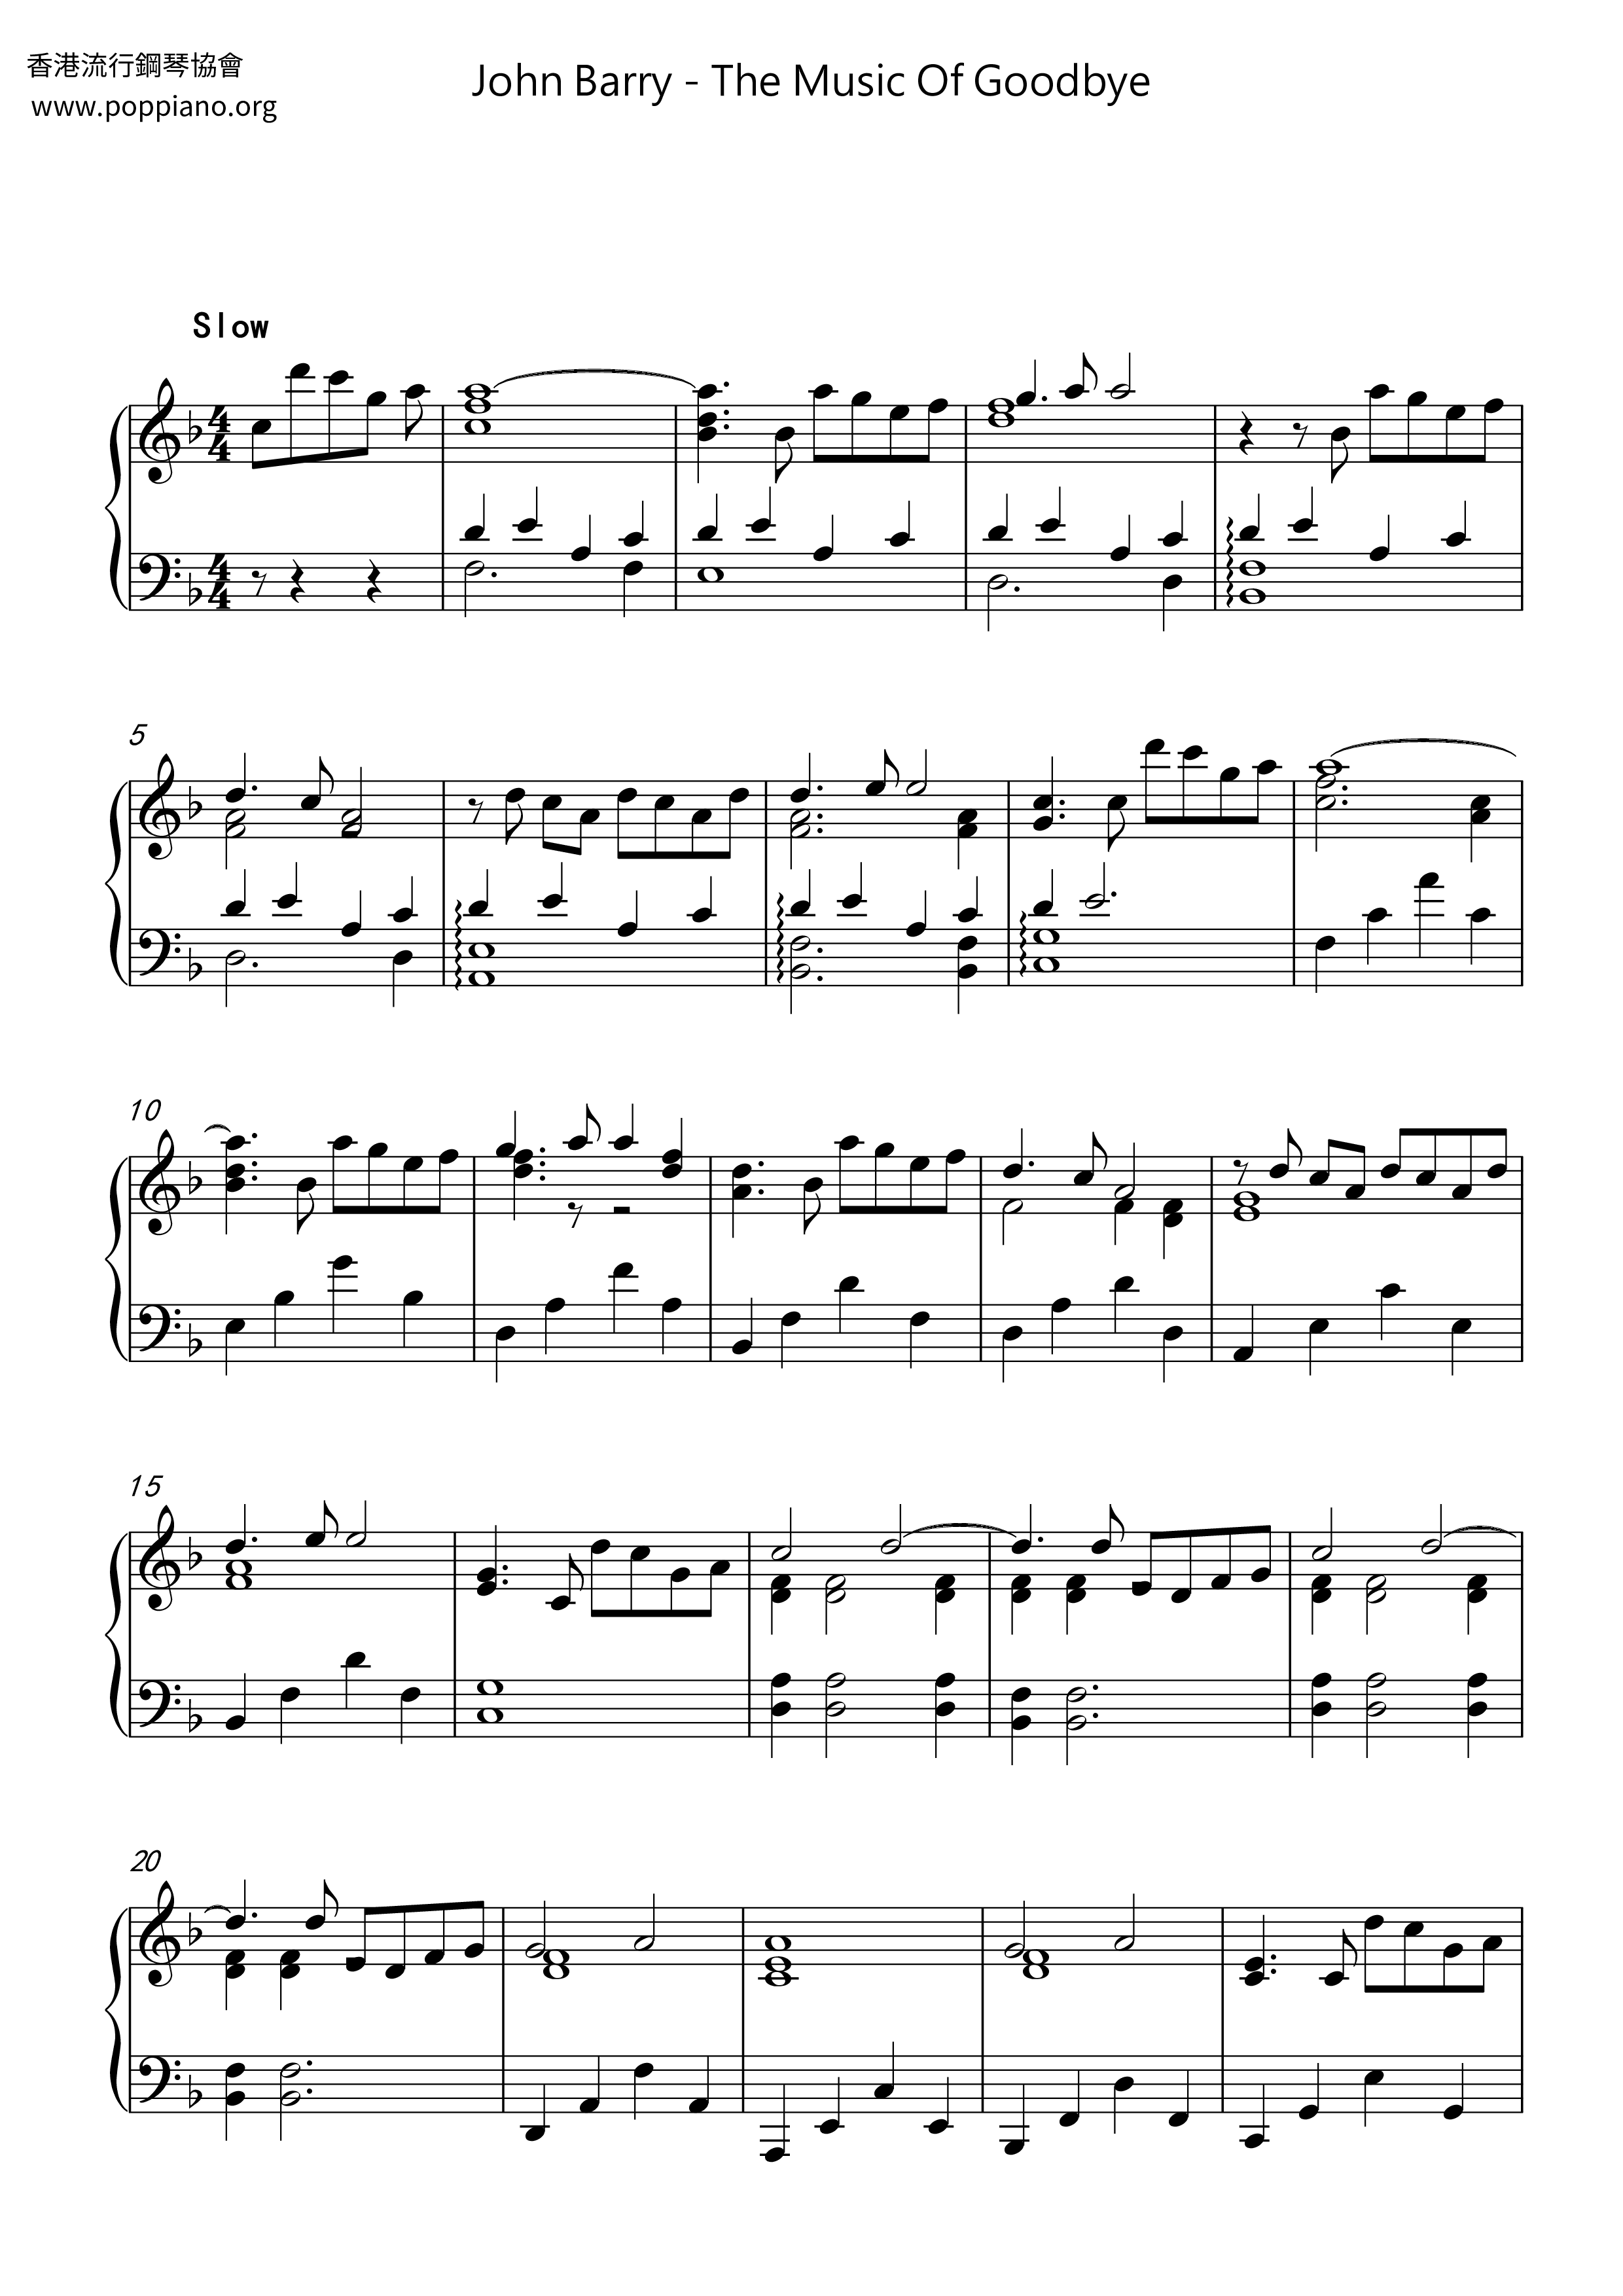 The Music Of Goodbye Score